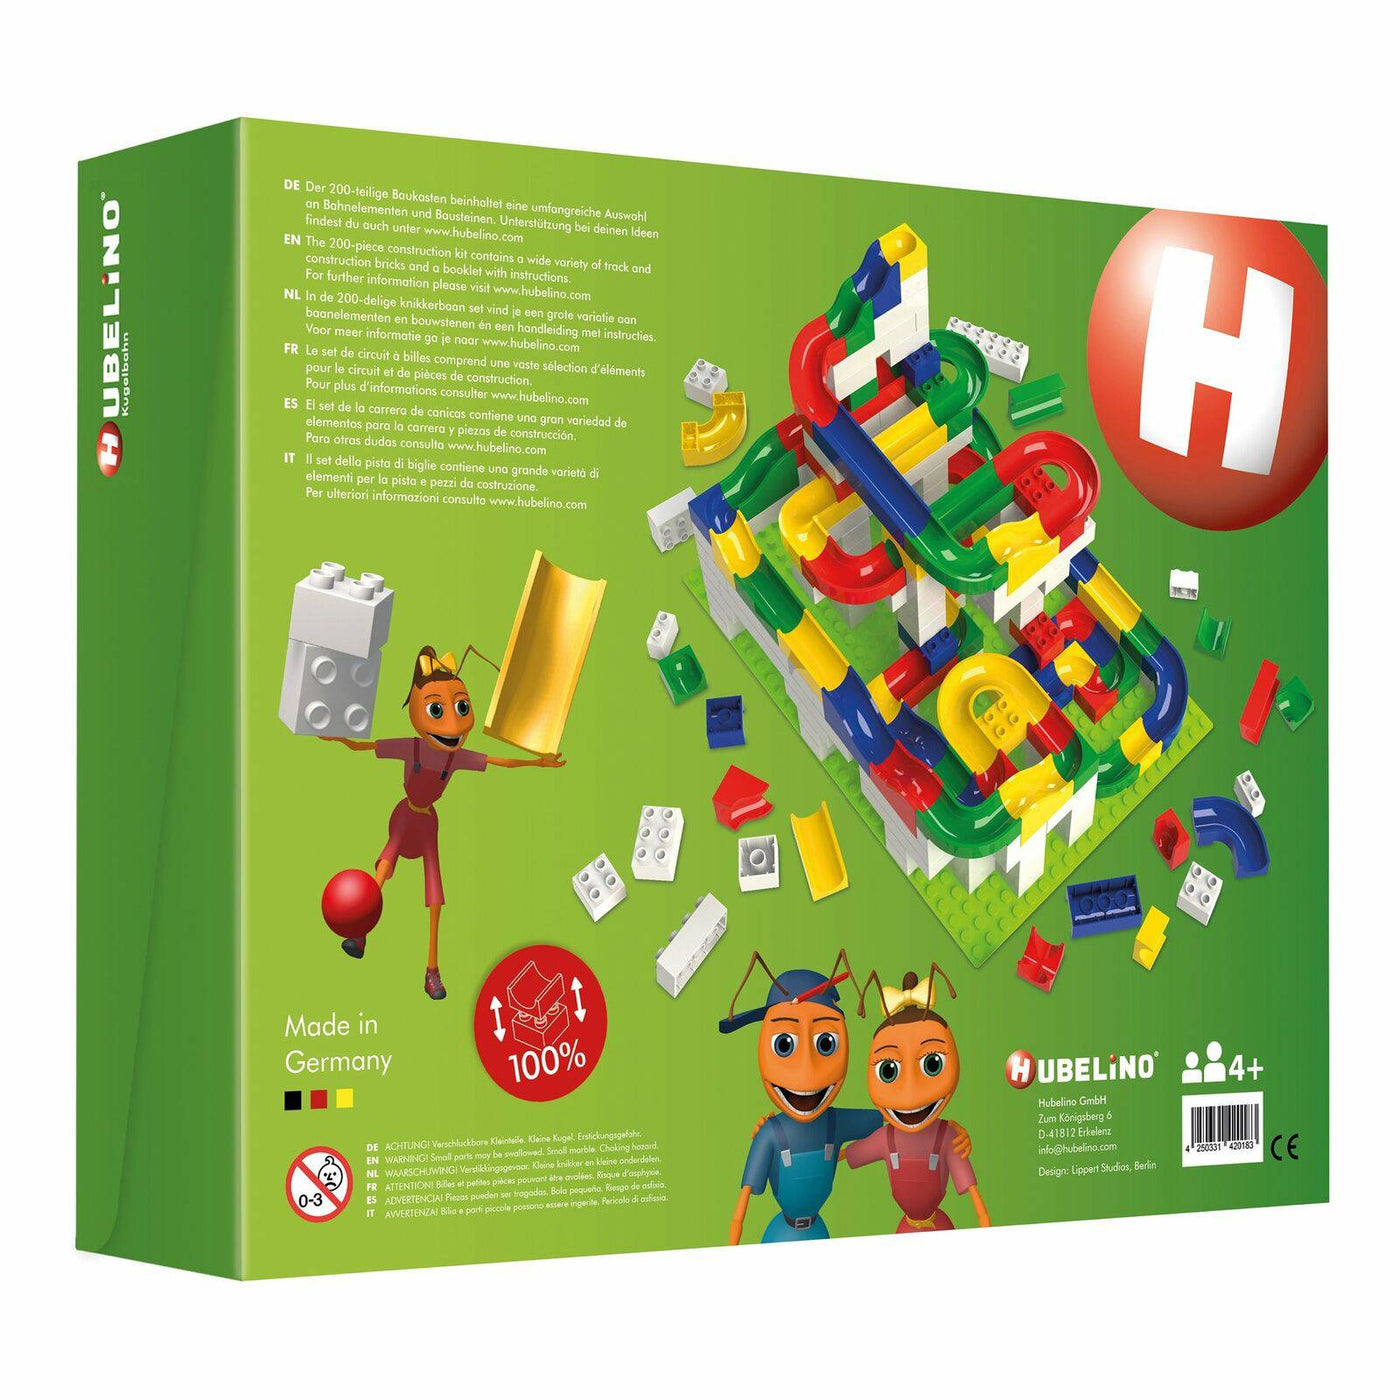 Marble Run 200 Pcs Educational Toy Set, Construction Building Blocks – JoyX